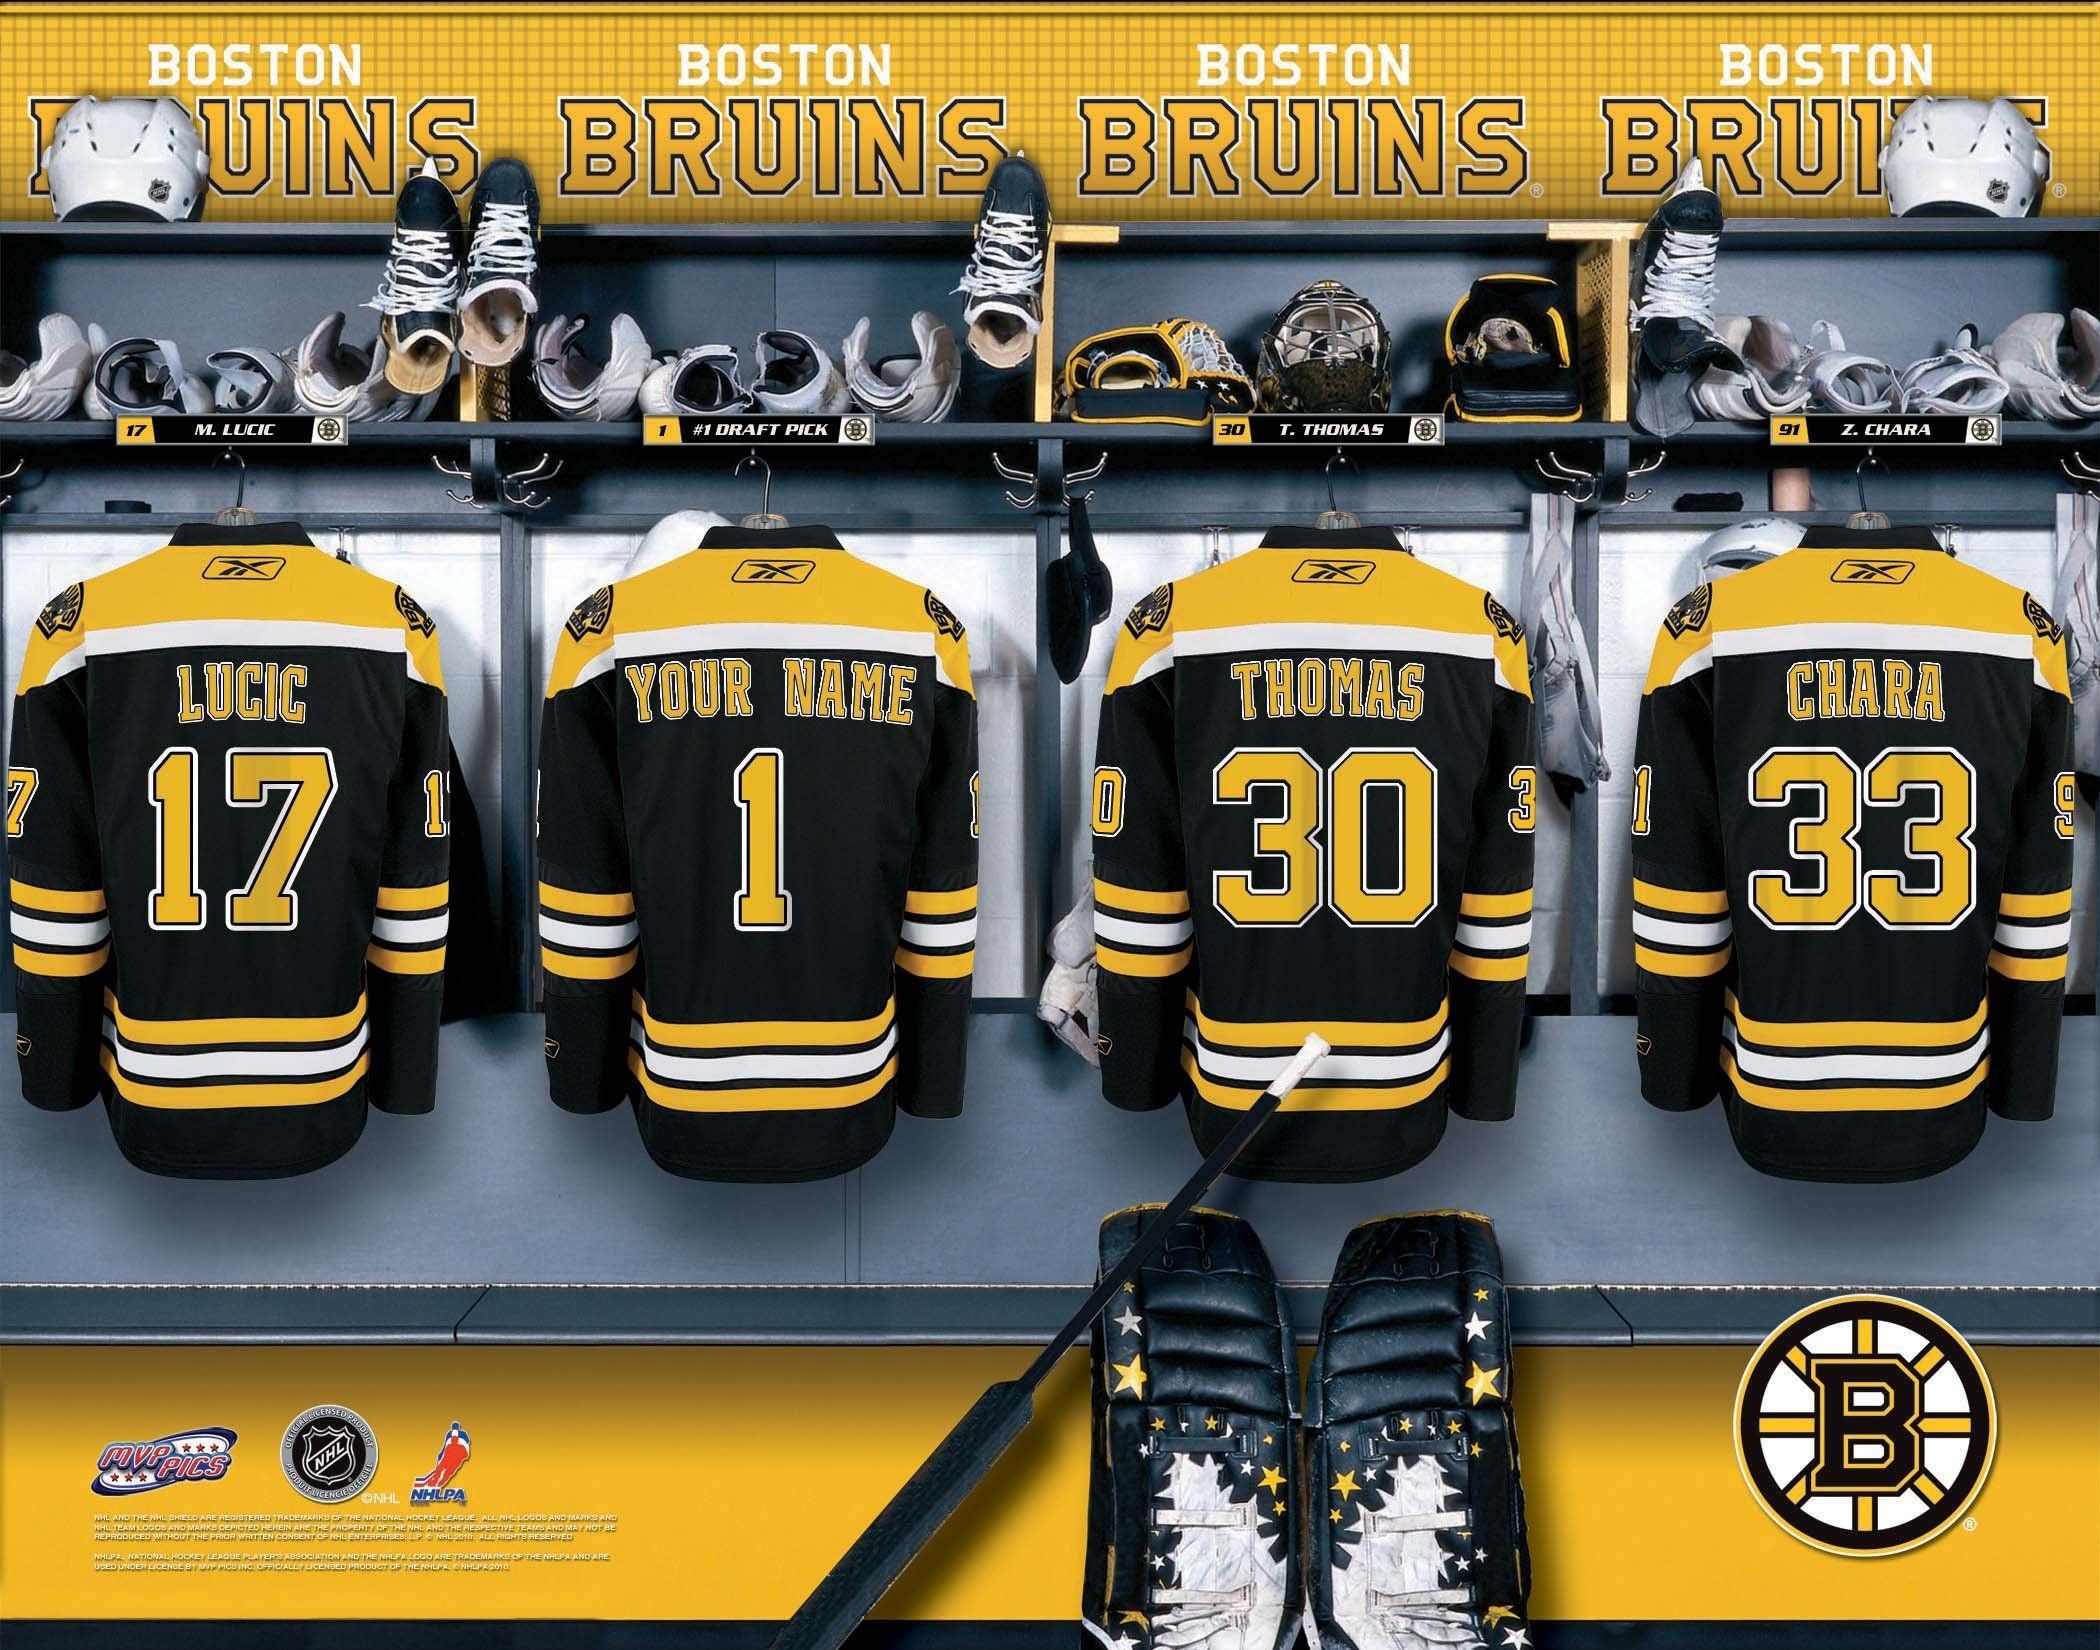 2100x1650 BOSTON BRUINS nhl hockey (20) wallpaper